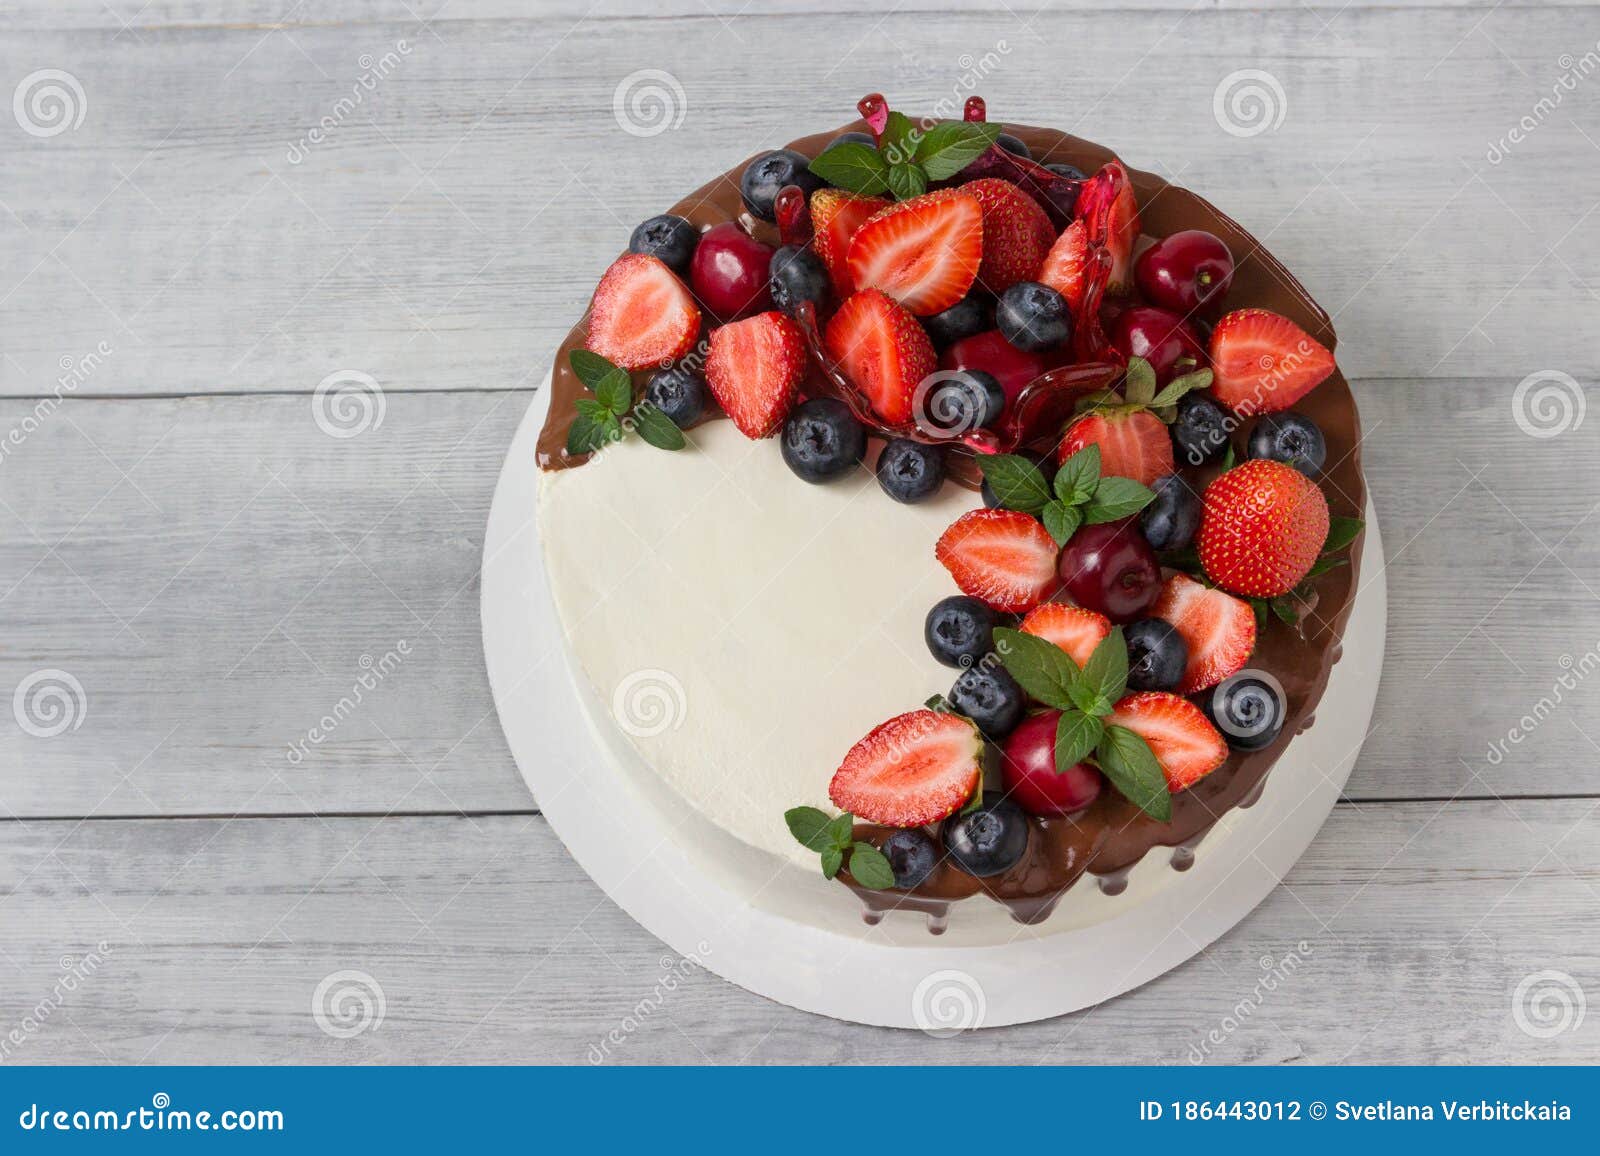 Sponge Cake with Chocolate Ganache and Fresh Fruits Stock Photo - Image ...